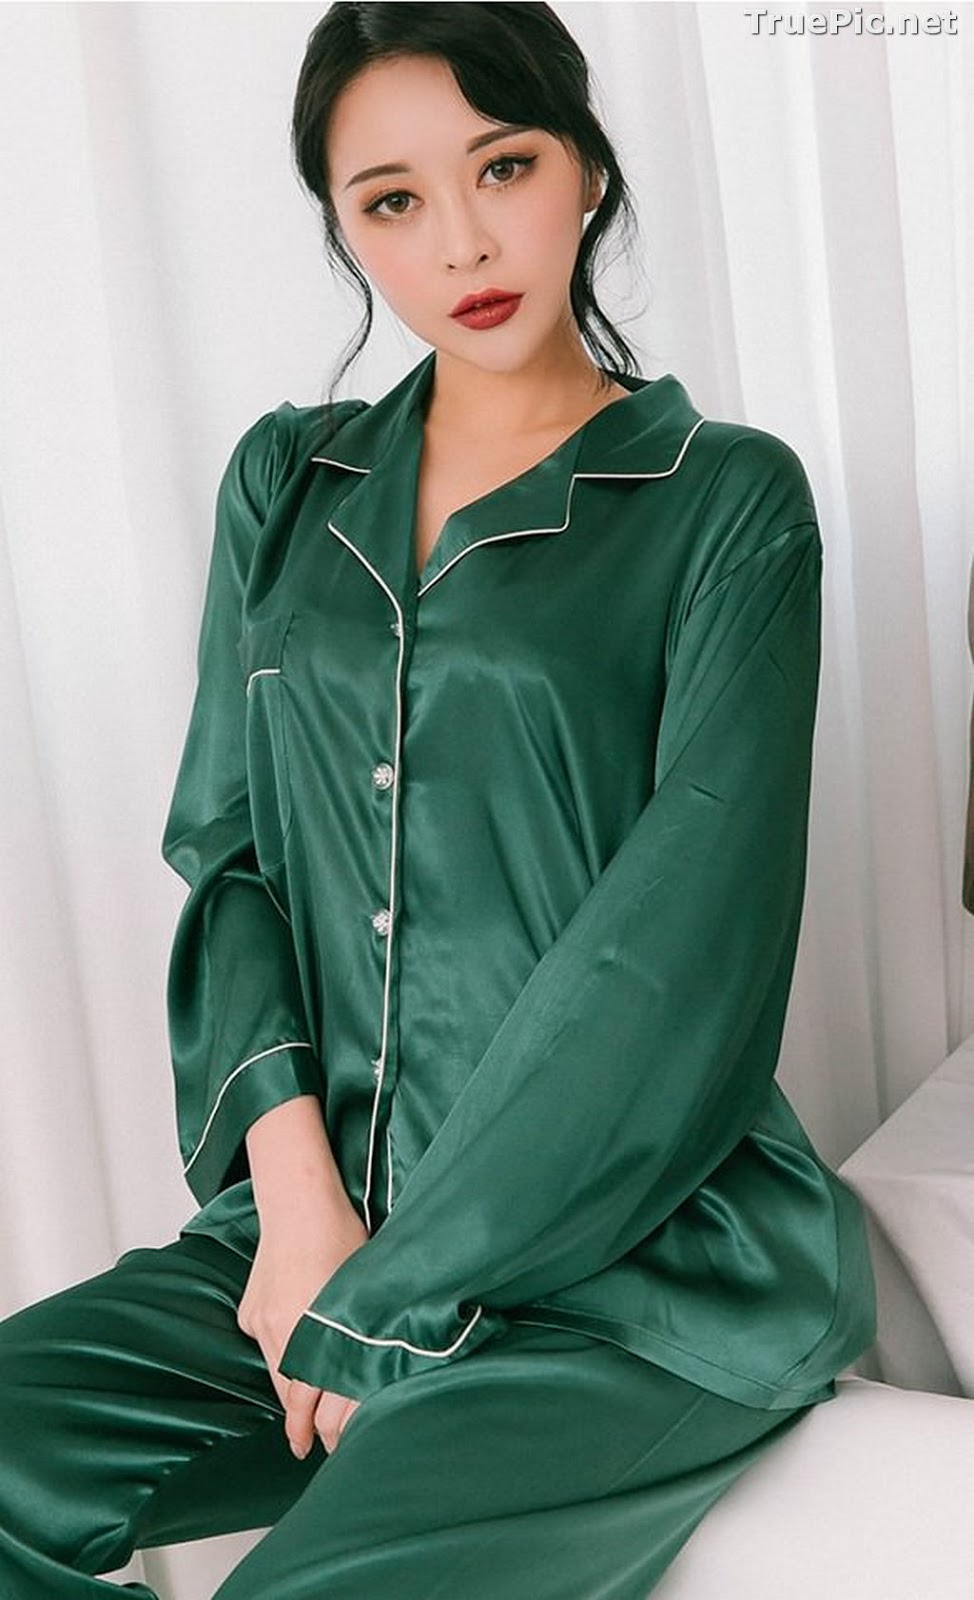 Image Ryu Hyeonju - Korean Fashion Model - Pijama and Lingerie Set - TruePic.net - Picture-24